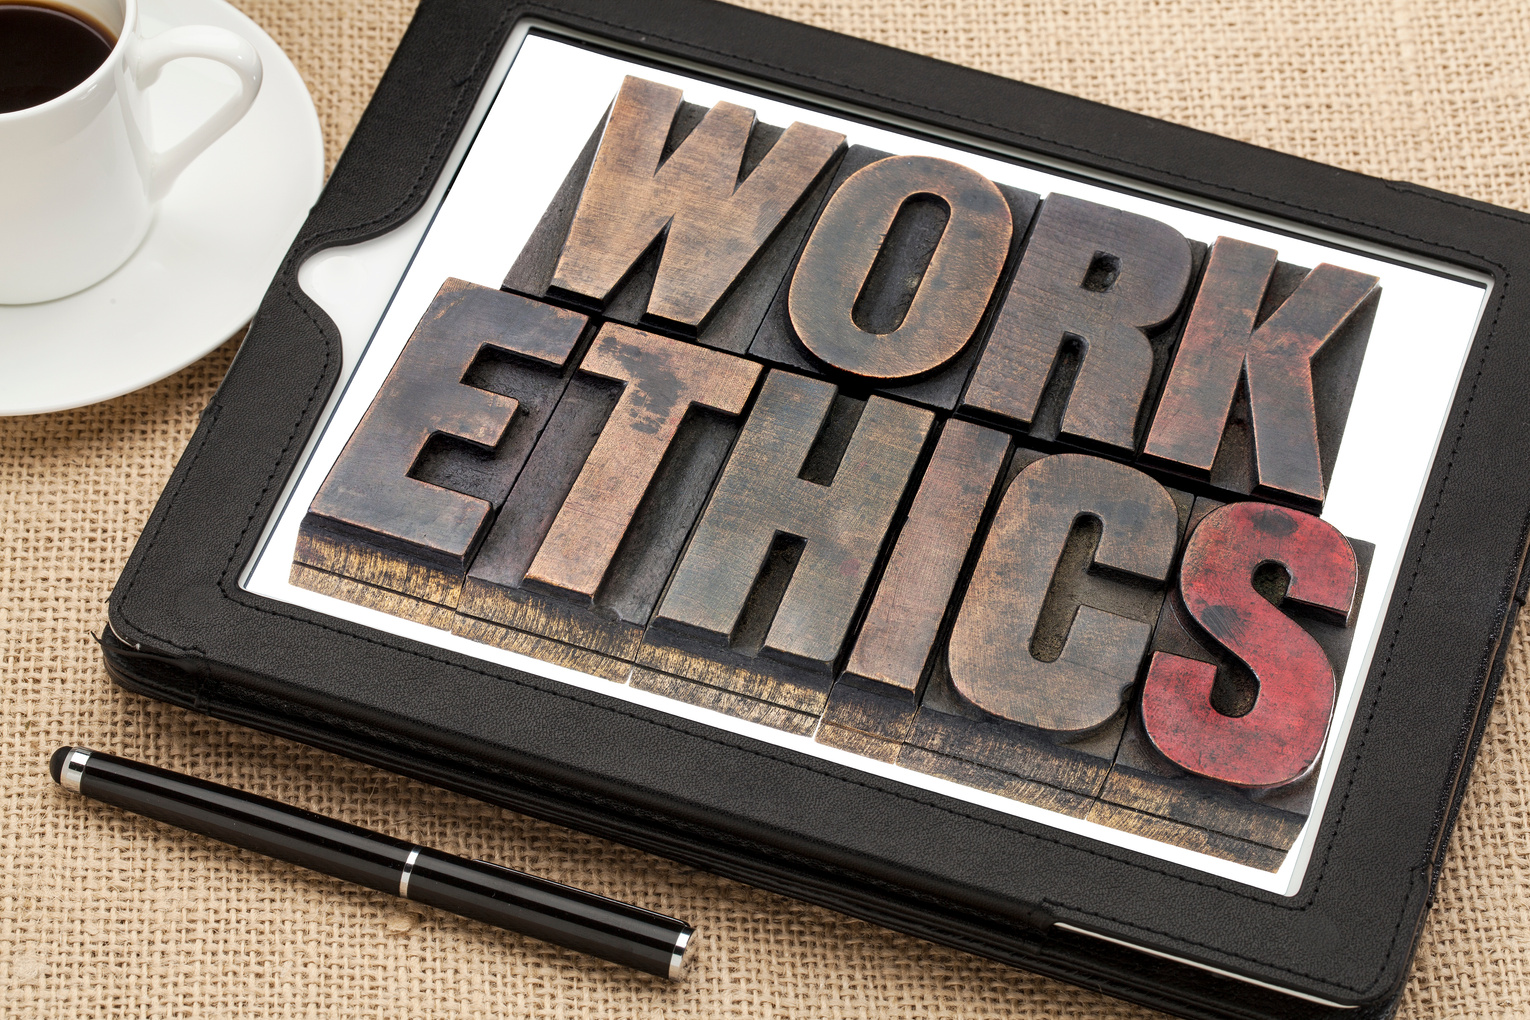 work ethics on digital tablet